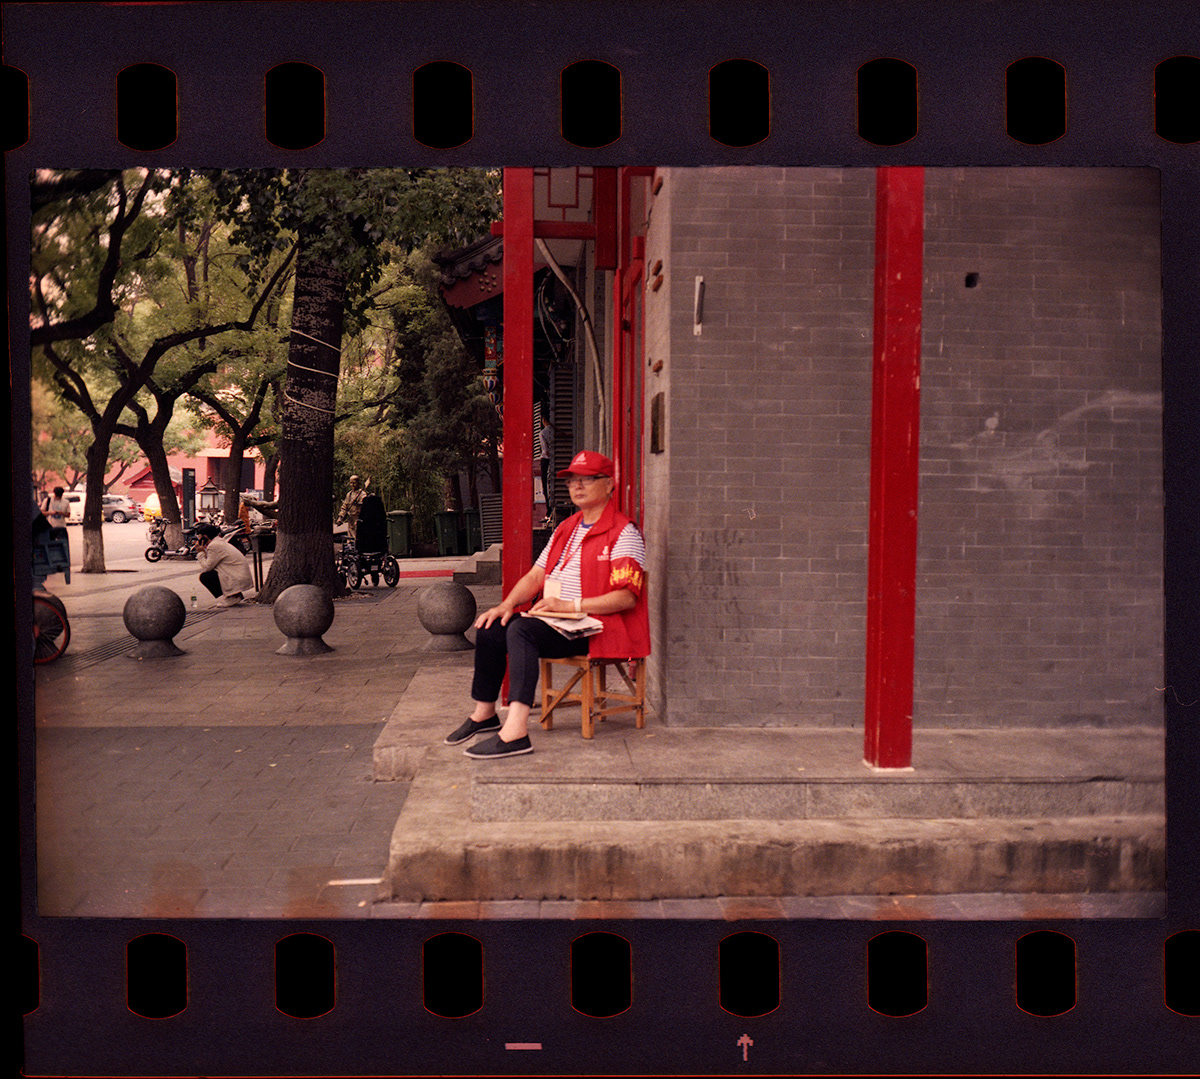 #135film #35mmfilmphotography #AnalogPhotography #beijing  #China #FilmPhotography #streetphotography